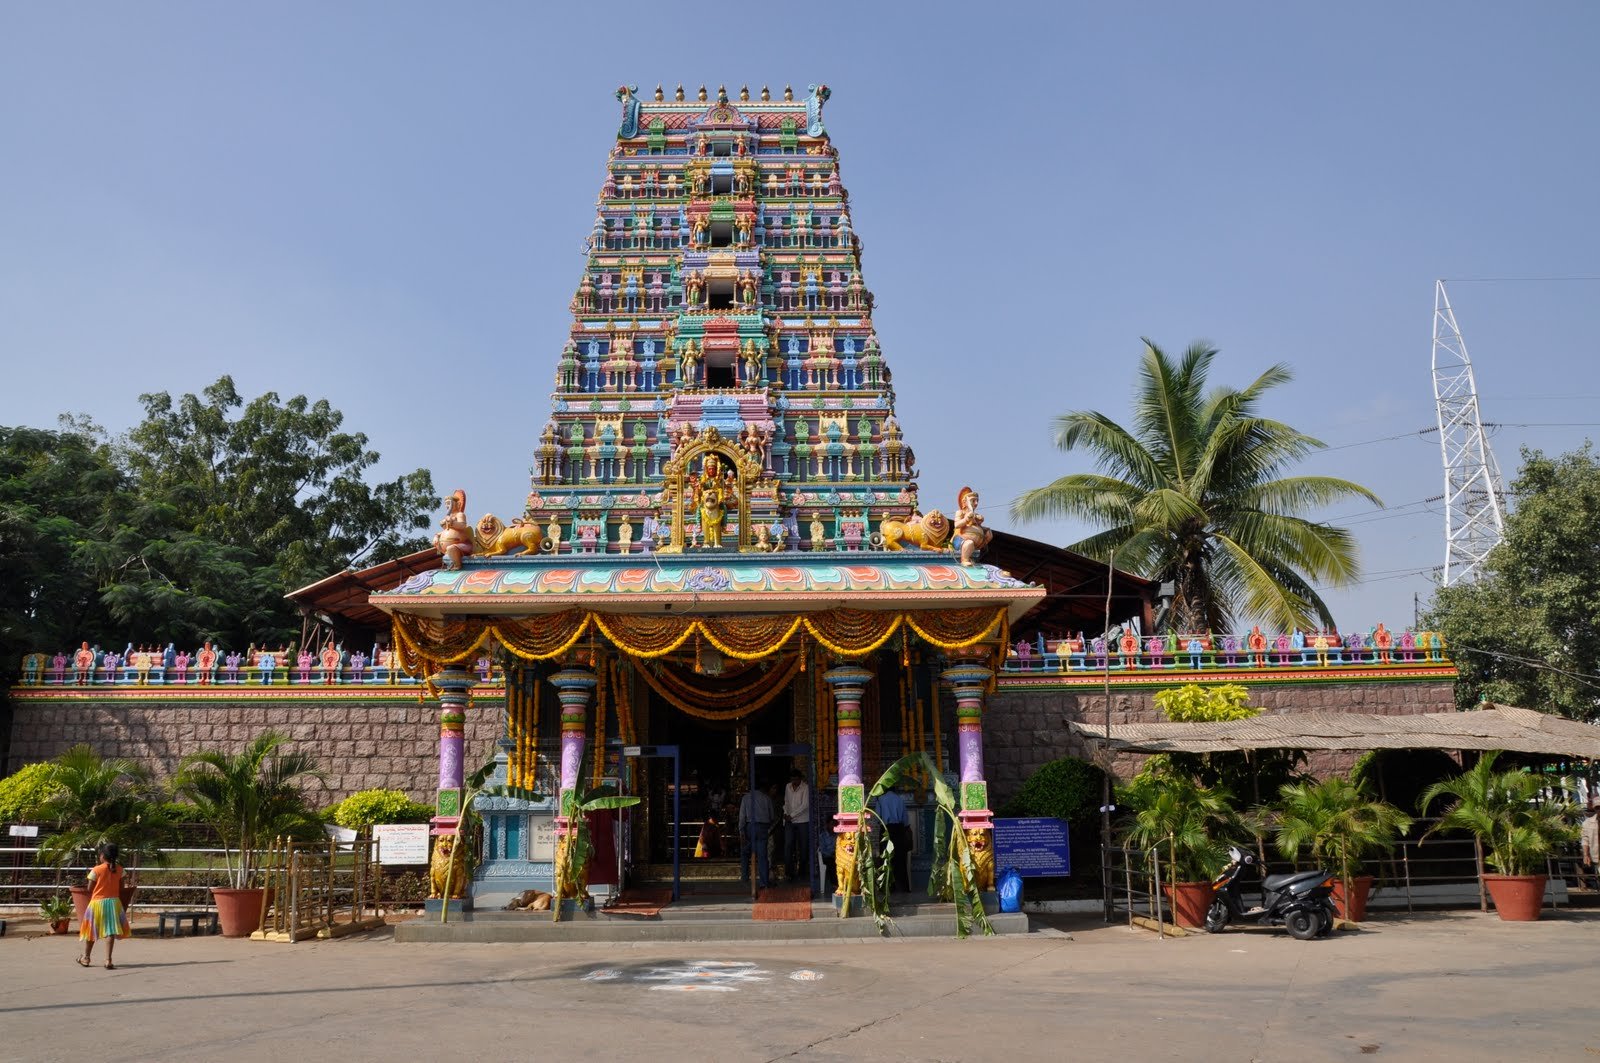 Peddama gudi temple in Hyderabad
famous temple of hyderabad